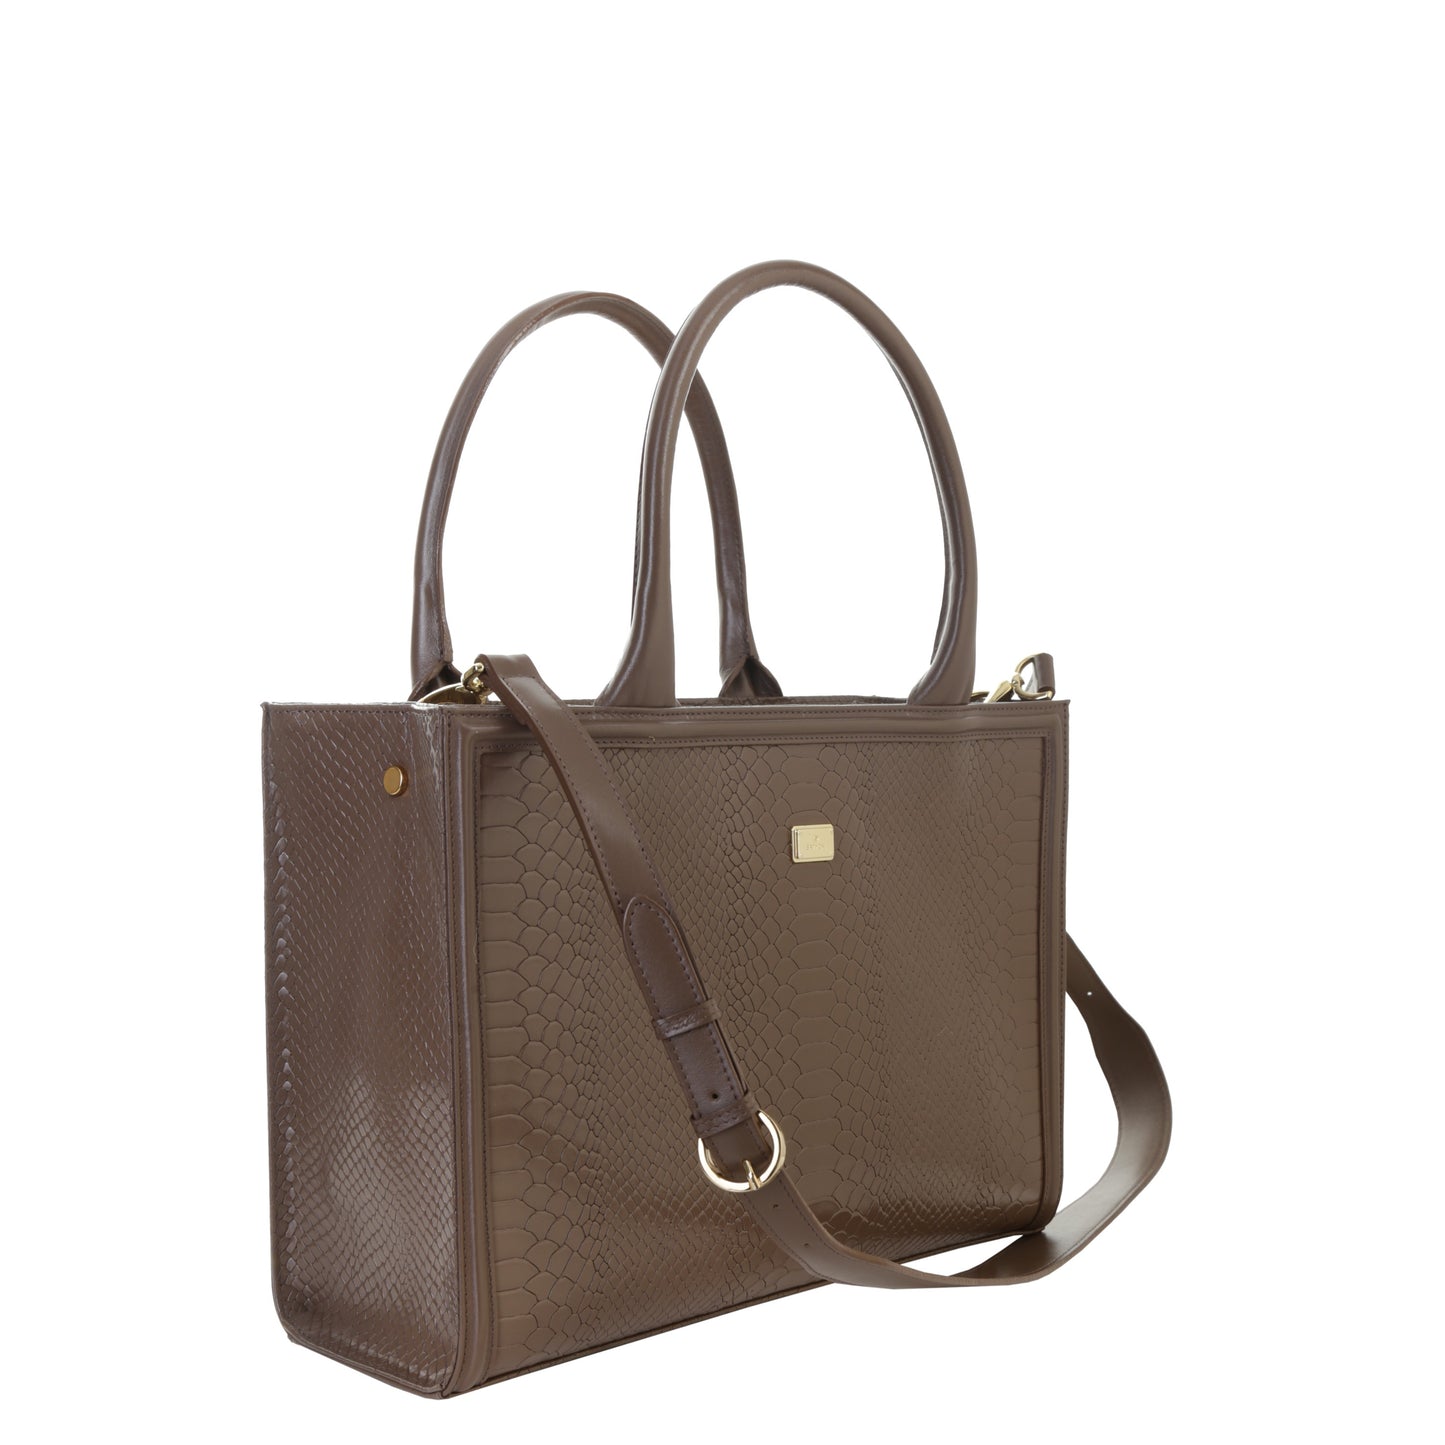 ANA MOCCA women's leather handbag